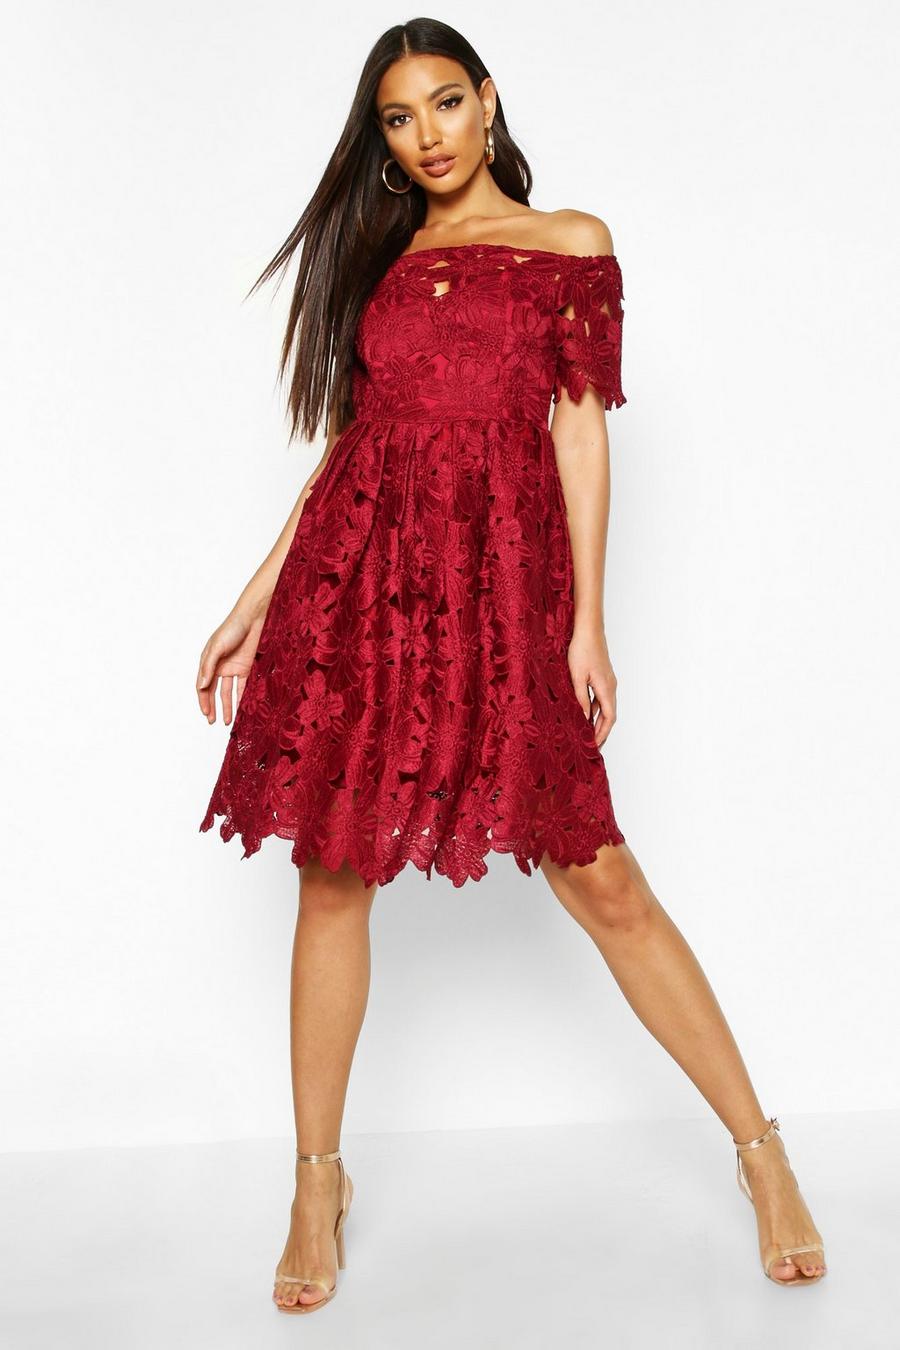 Berry red Boutique Off Shoulder Lace Skater Dress